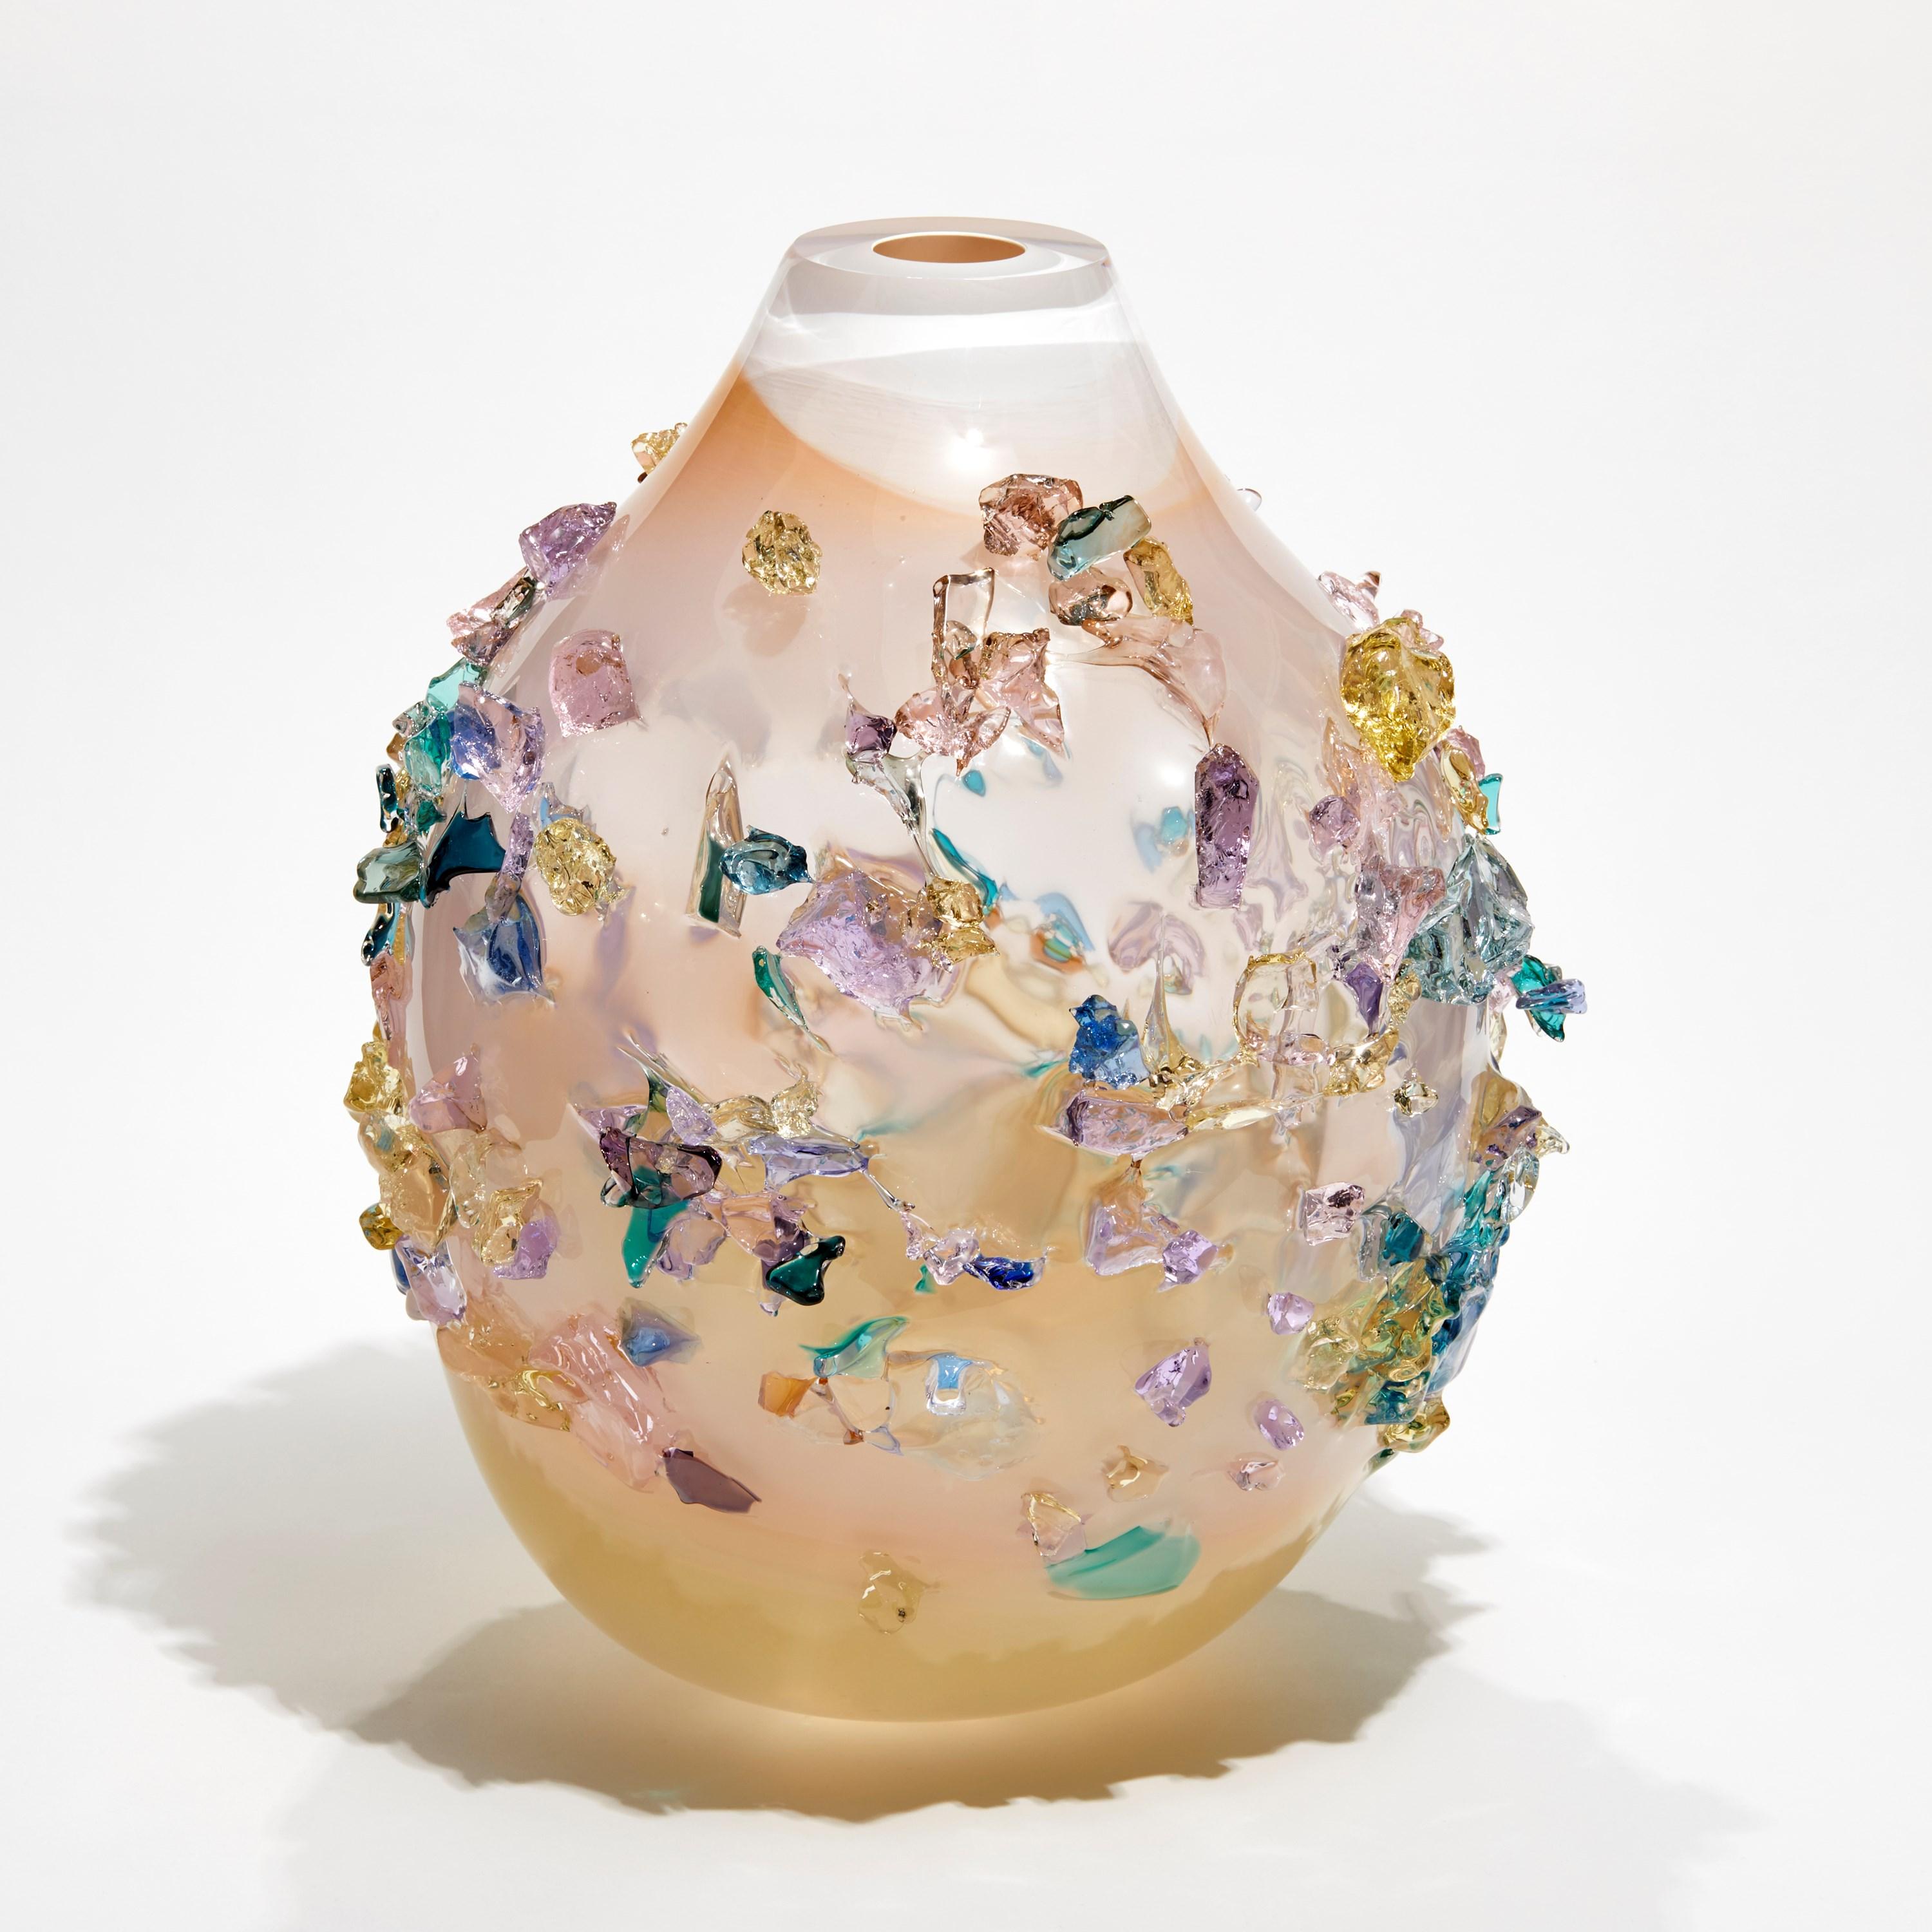 Organic Modern Sakura TRP21015, a Glass Vase in Corals with Mixed Colors by Maarten Vrolijk For Sale